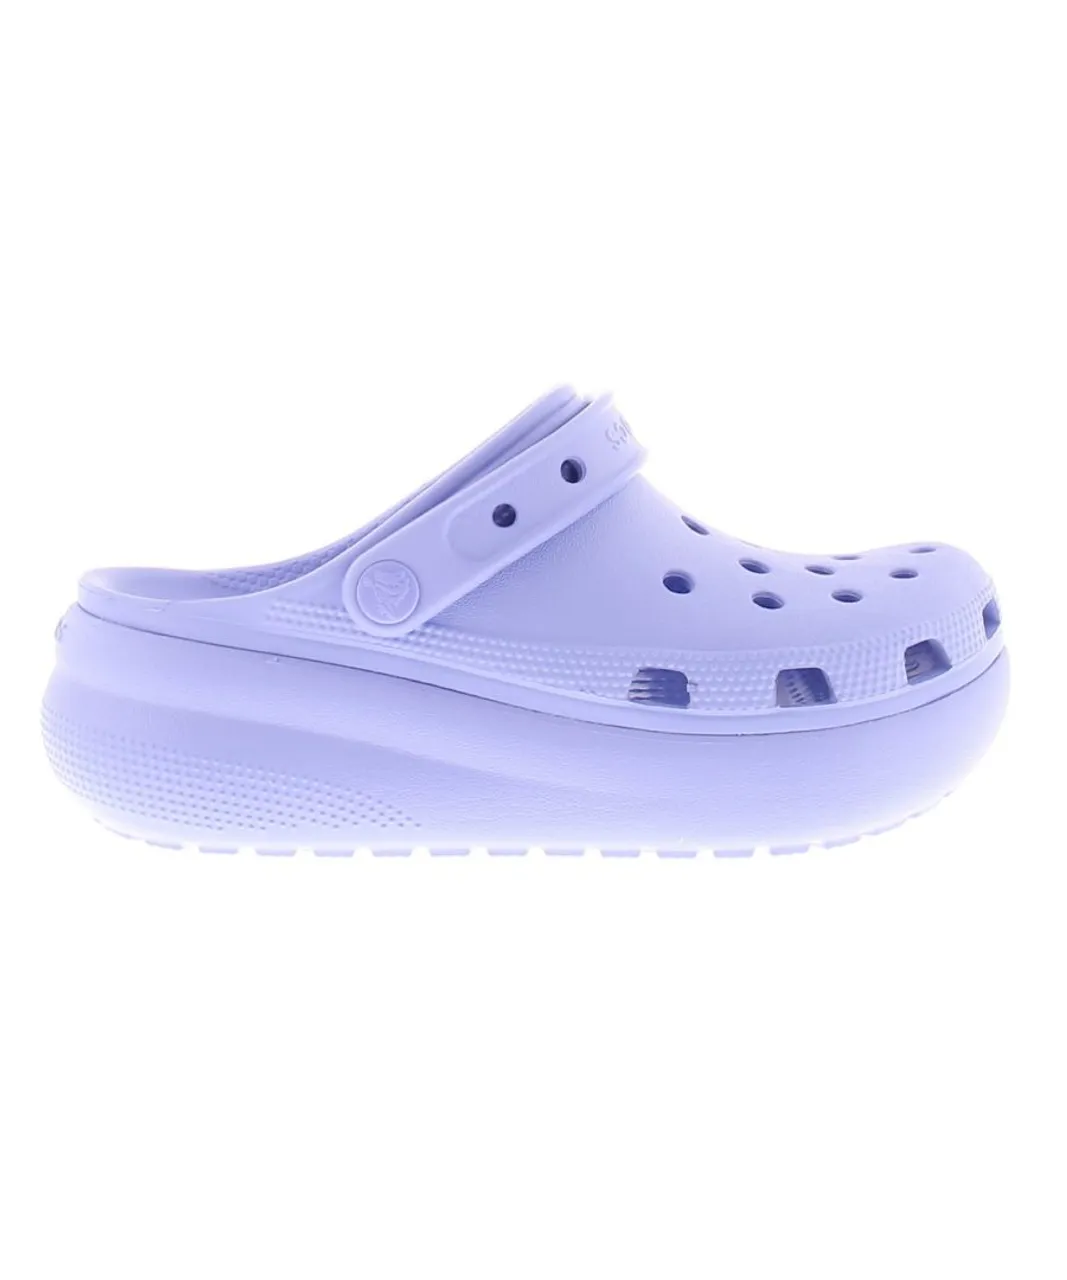 Crocs Older Girls Sandals Wedge Clogs Cutie Crush Clog Slip On purple